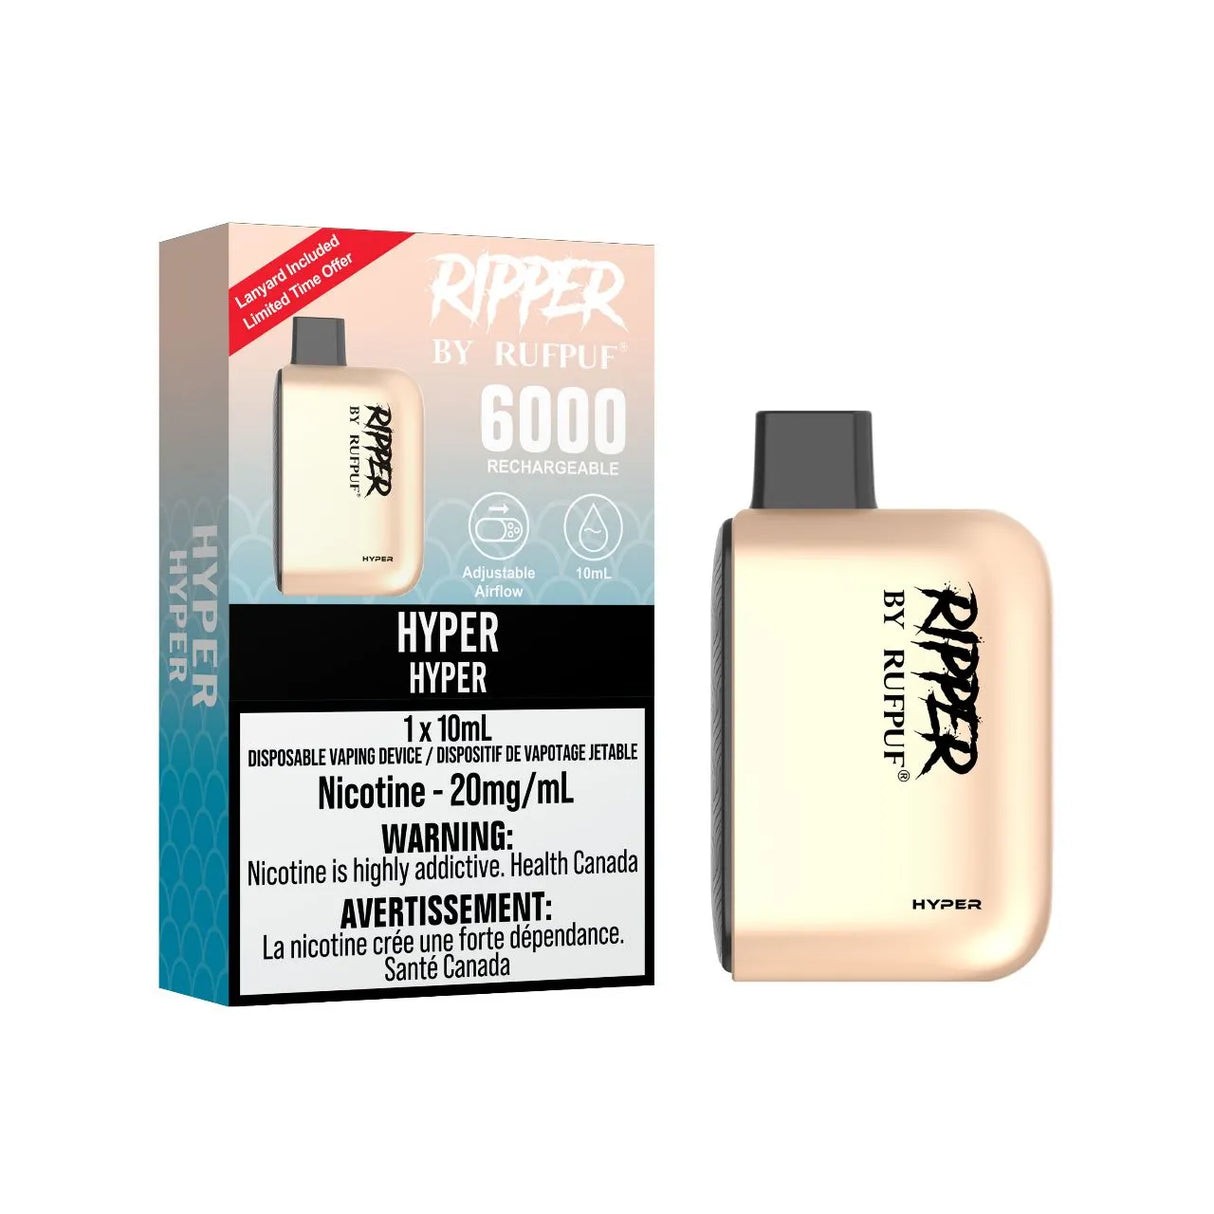 HYPER - Rufpuf Ripper 6000